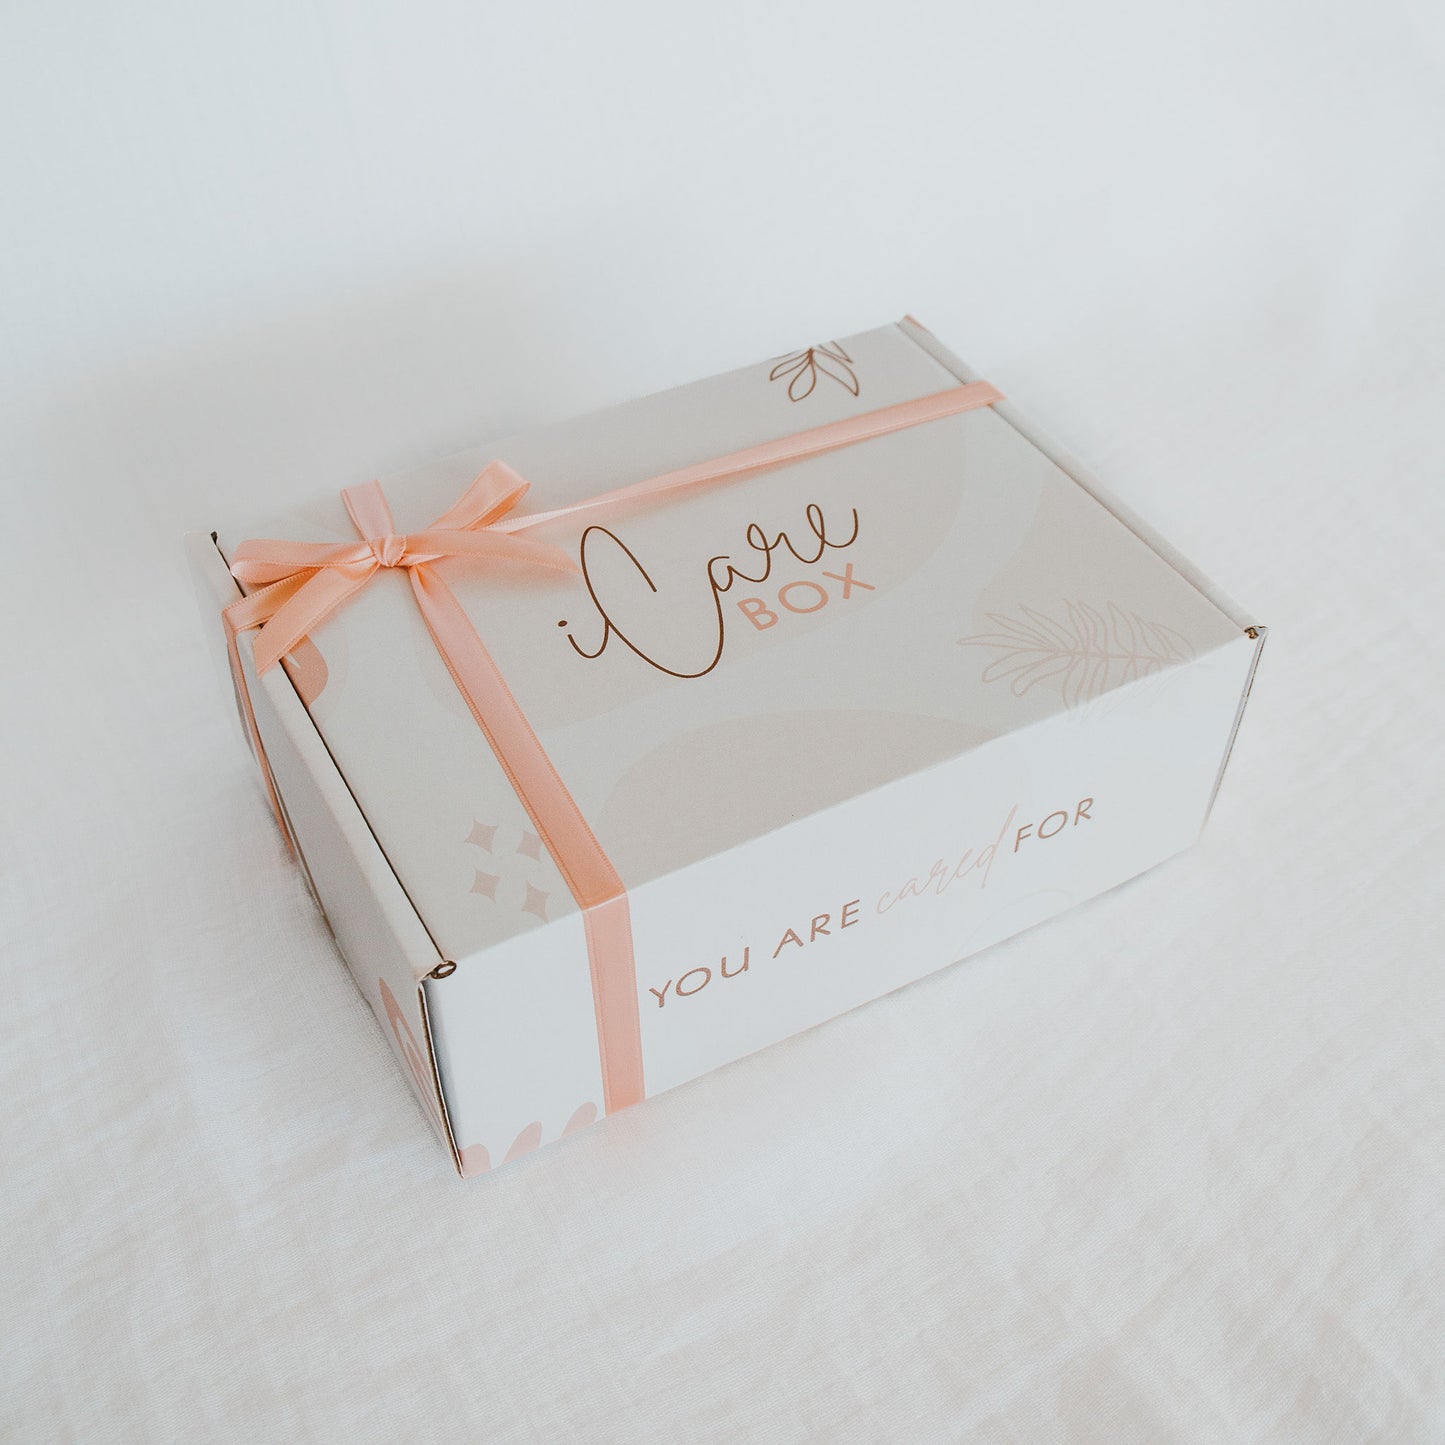 Delights - Self Care Gift Box